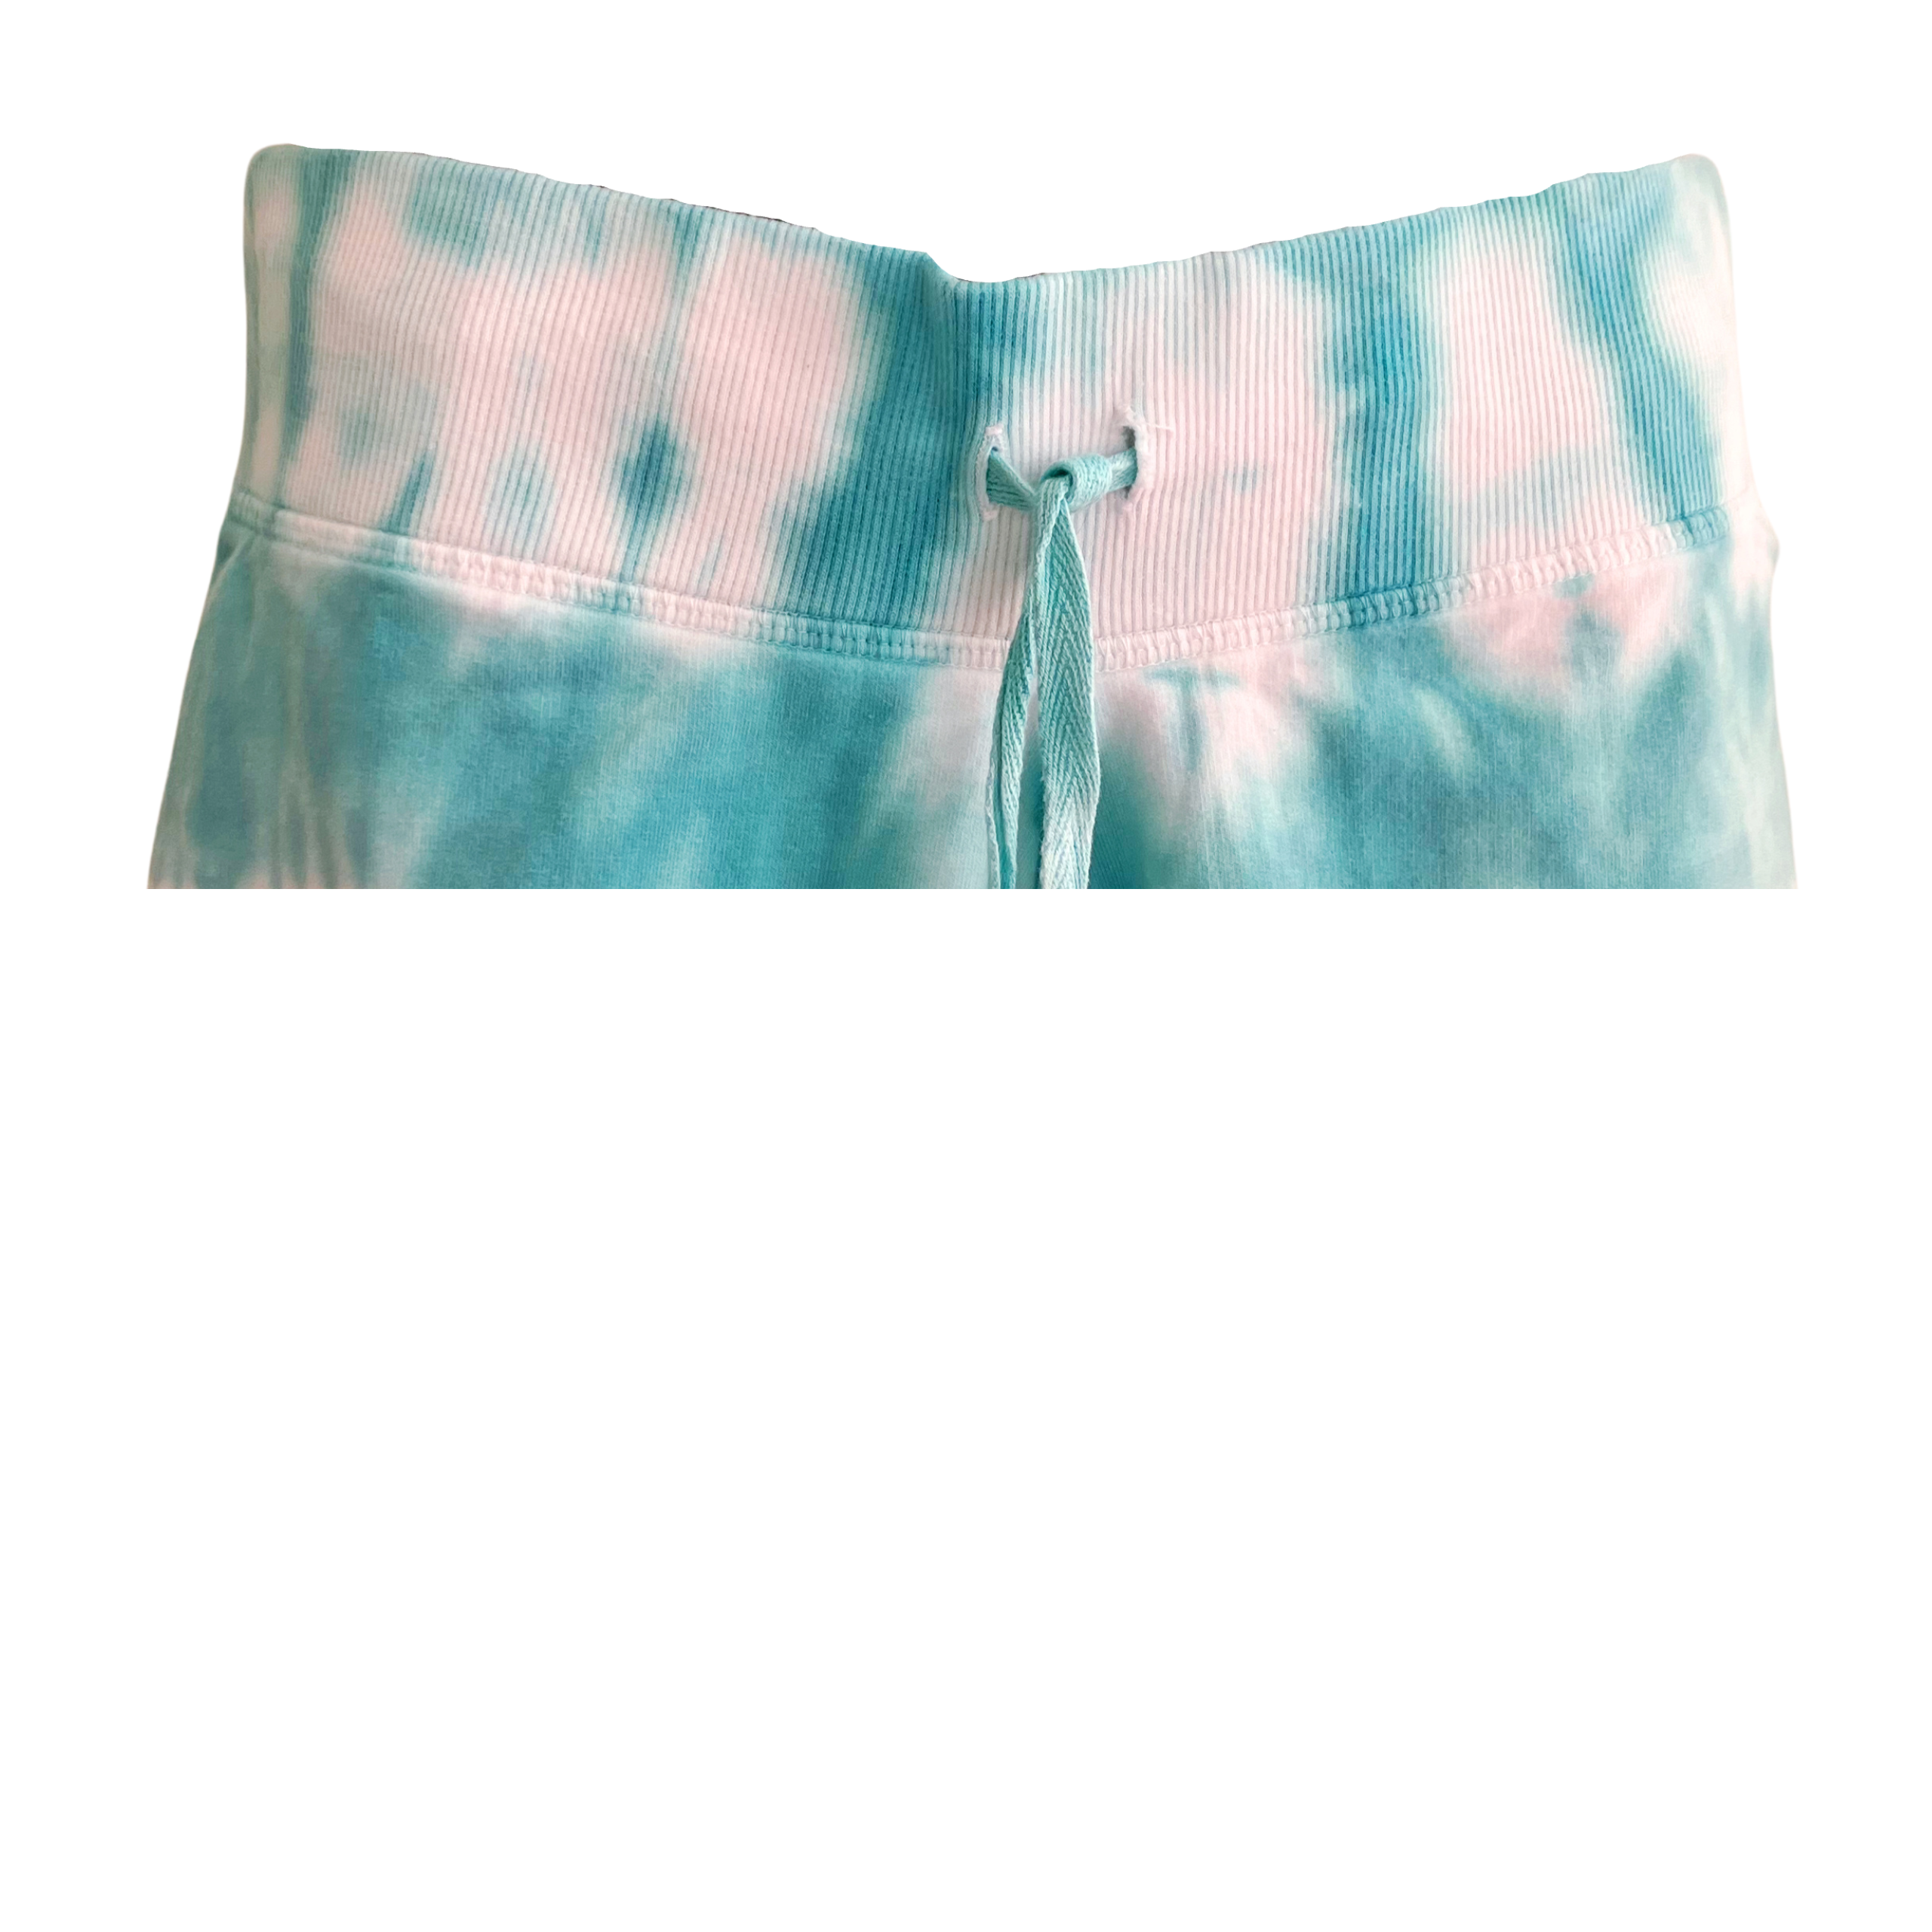 Women's Turquoise Tie Dye Shorts with Raw Edge Hem Details